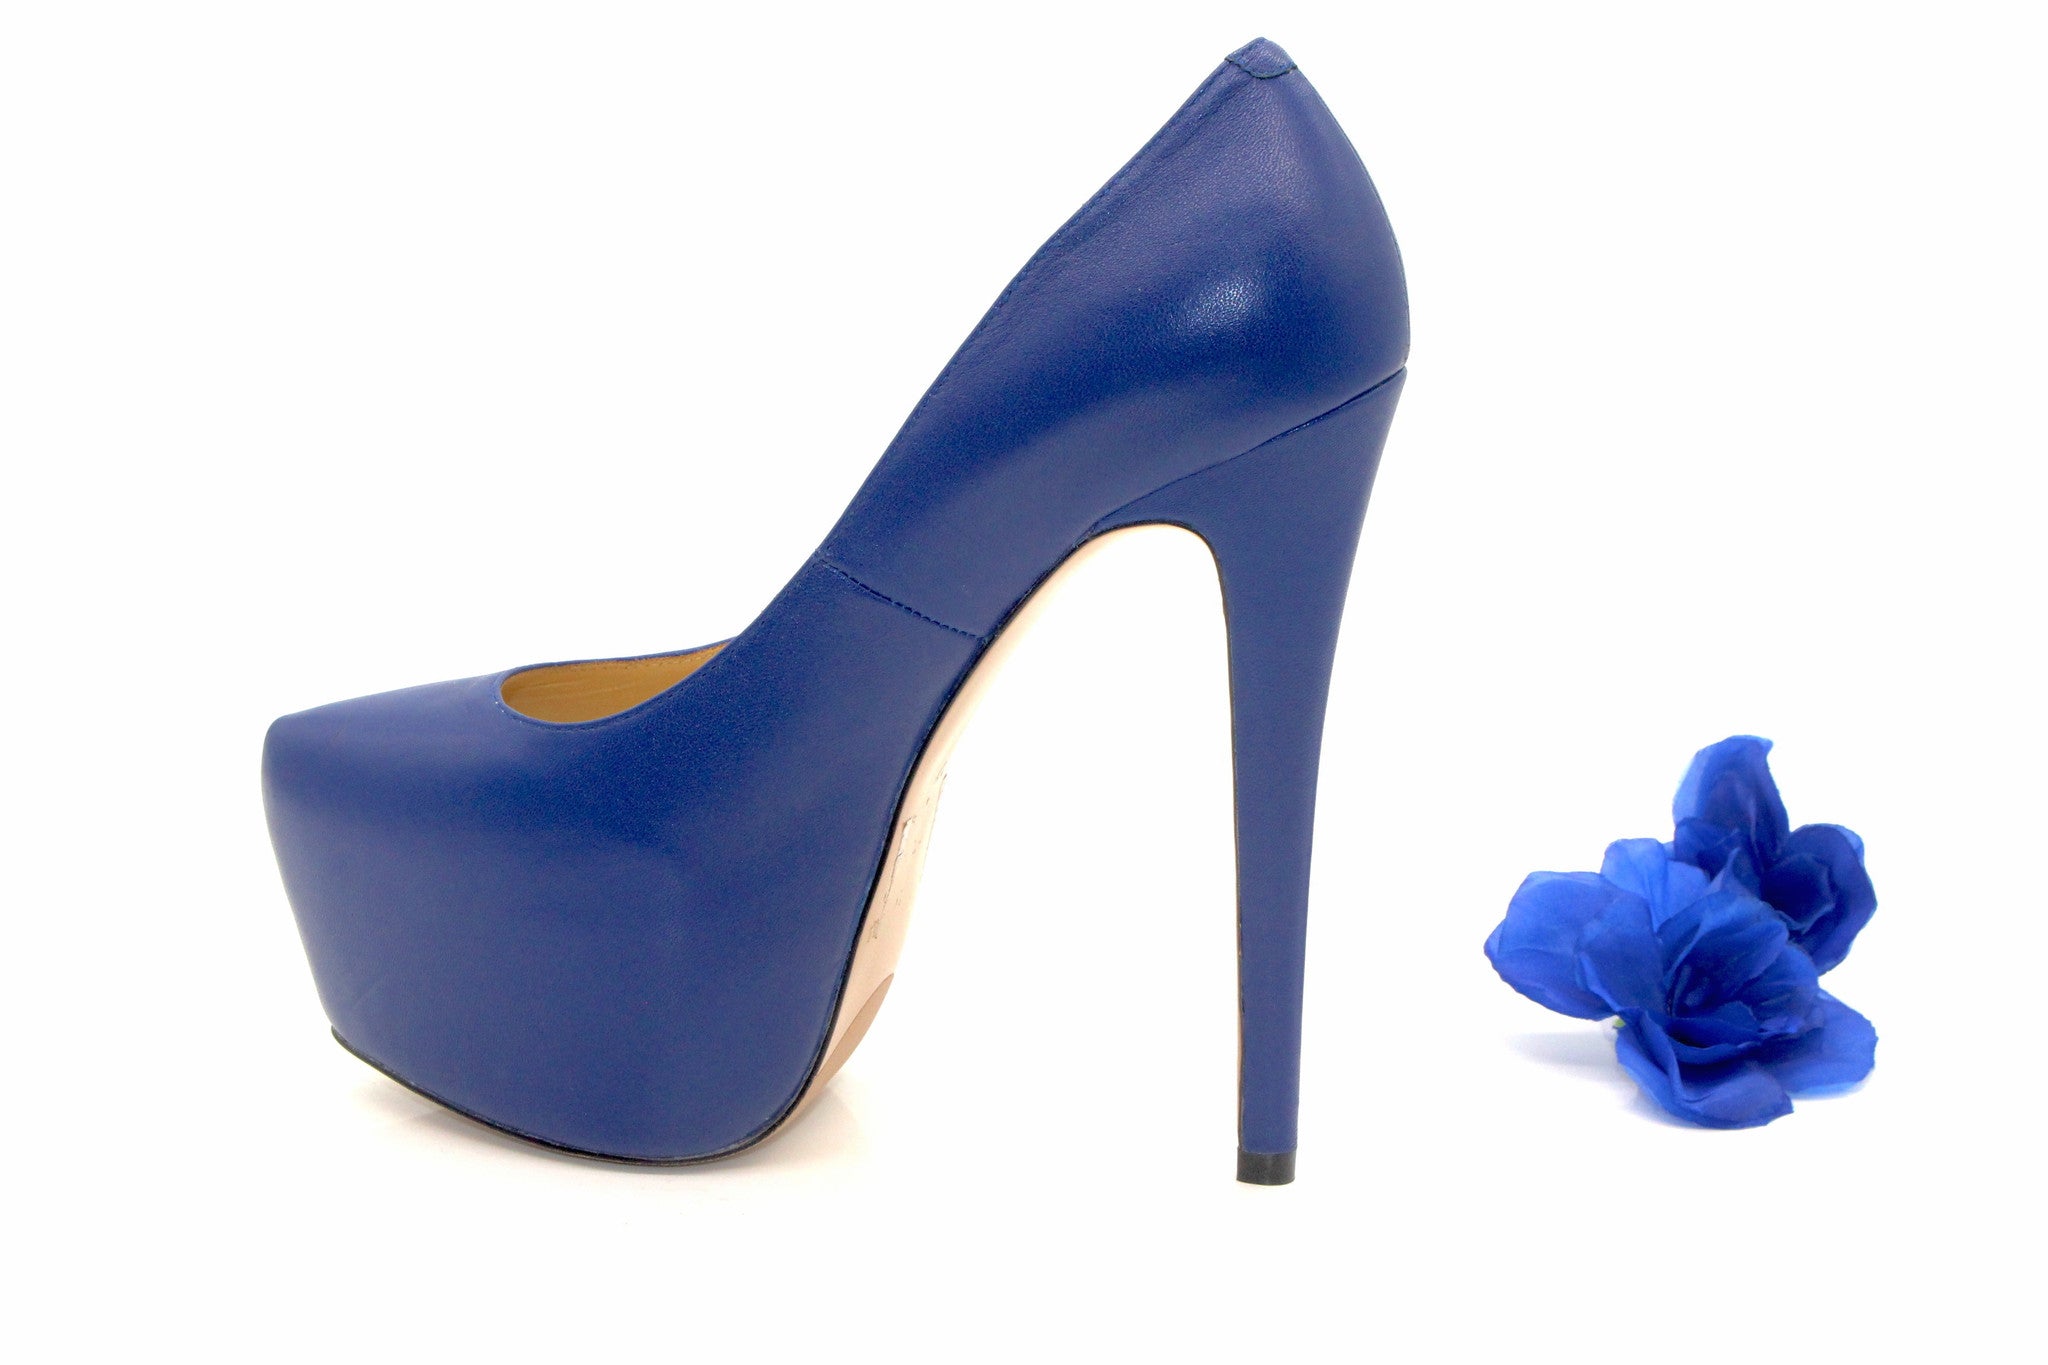 blue platform heels